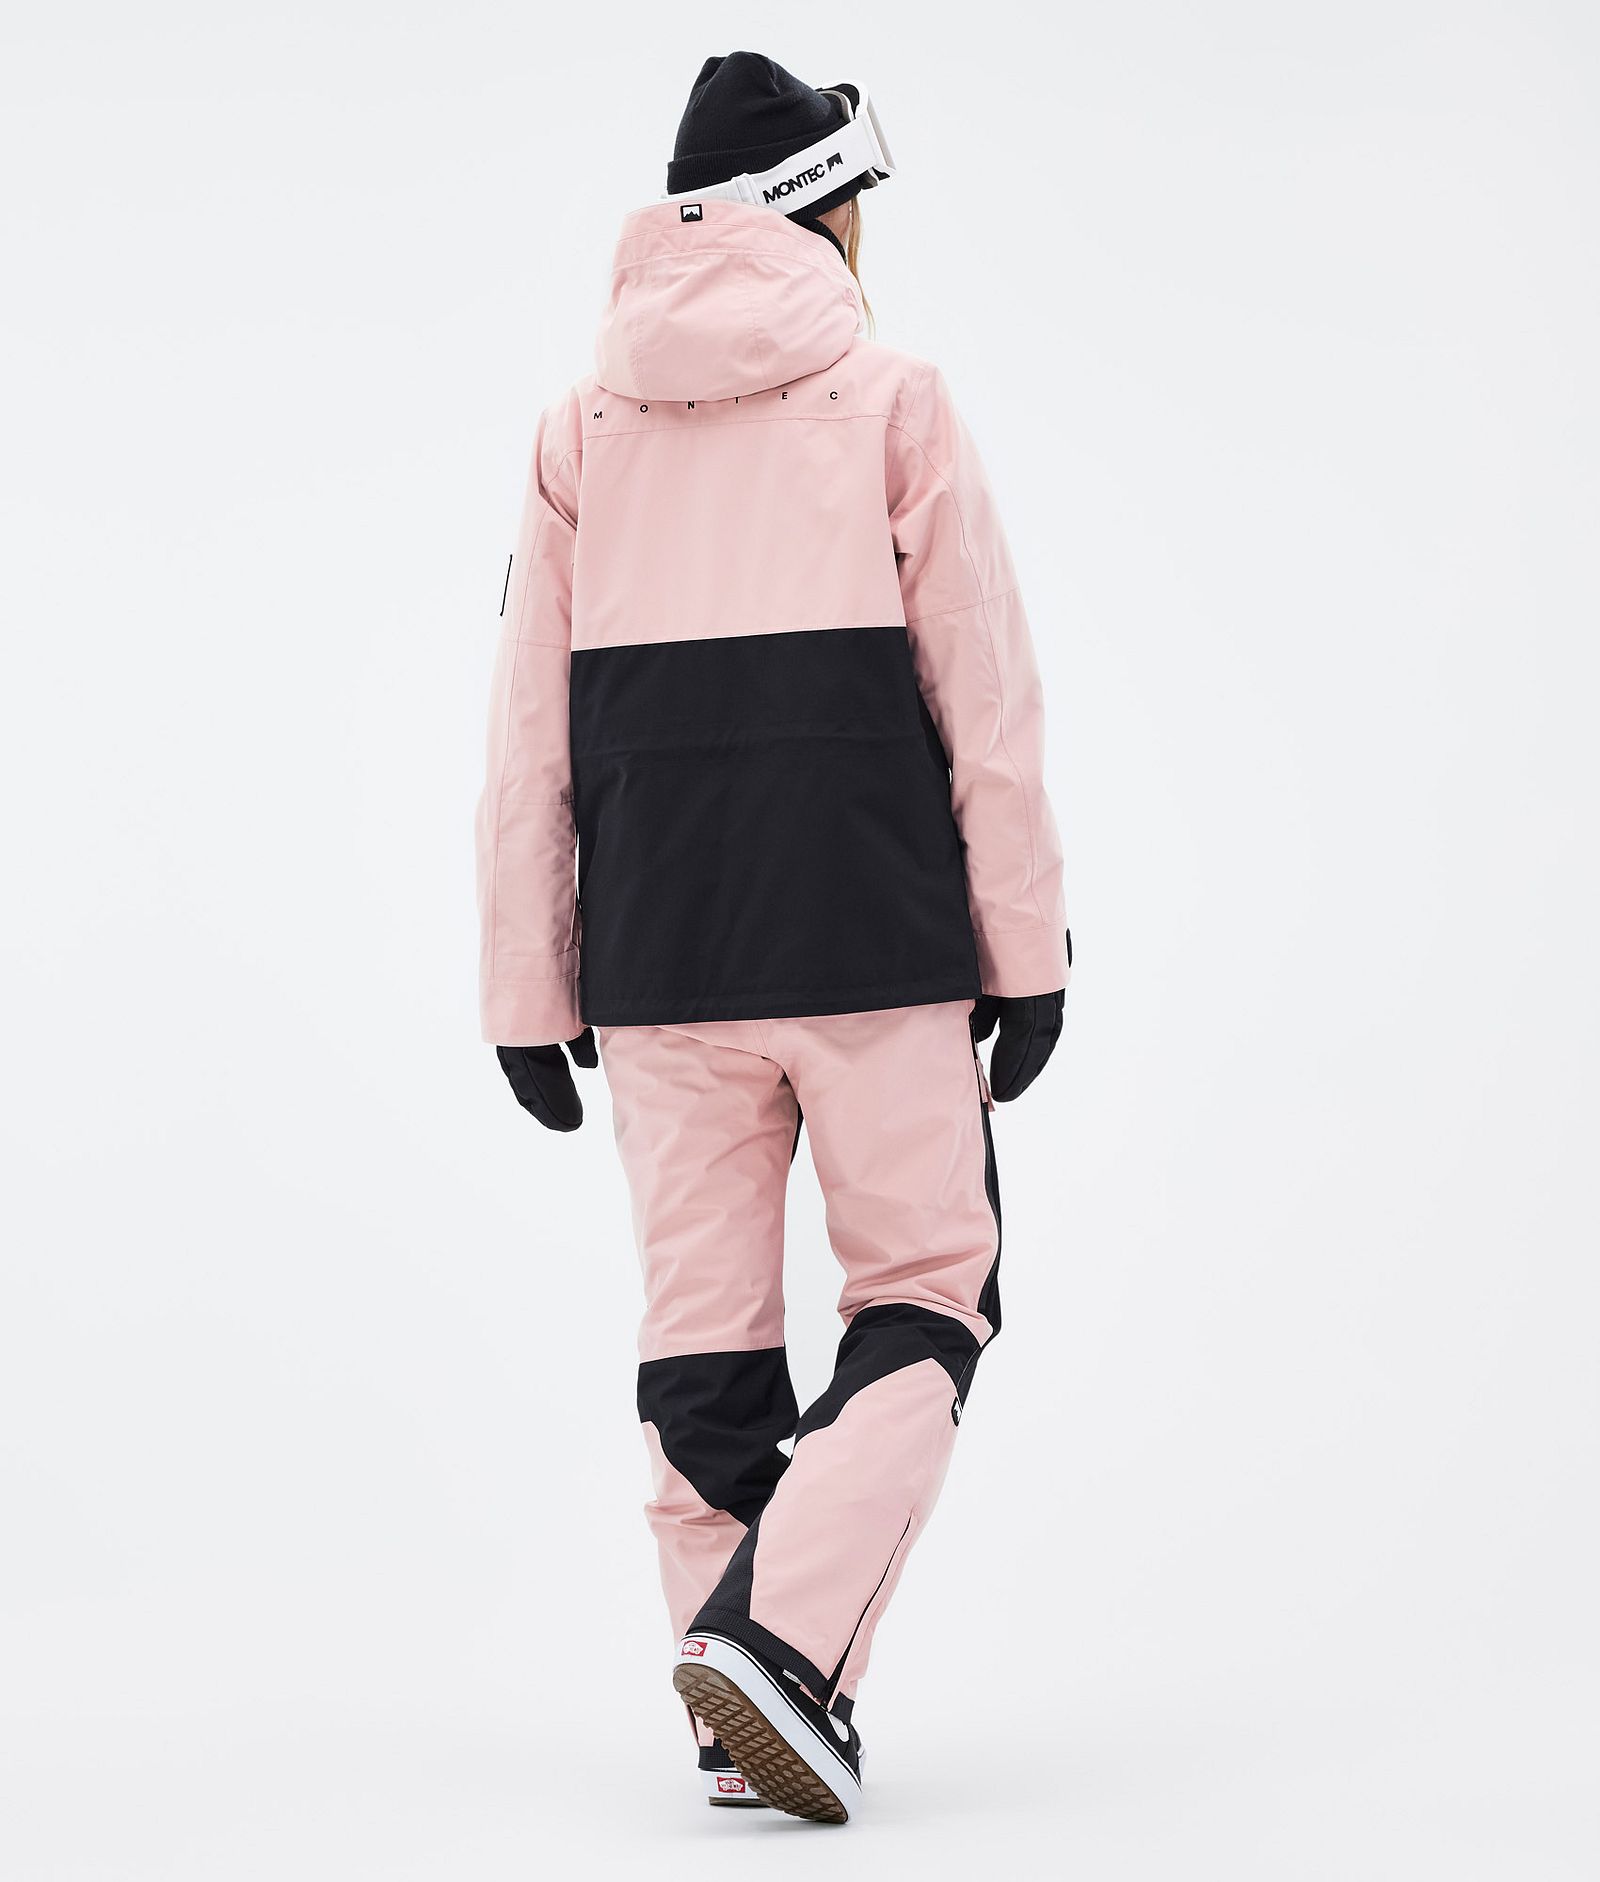 Doom W Outfit Snowboard Femme Soft Pink/Black